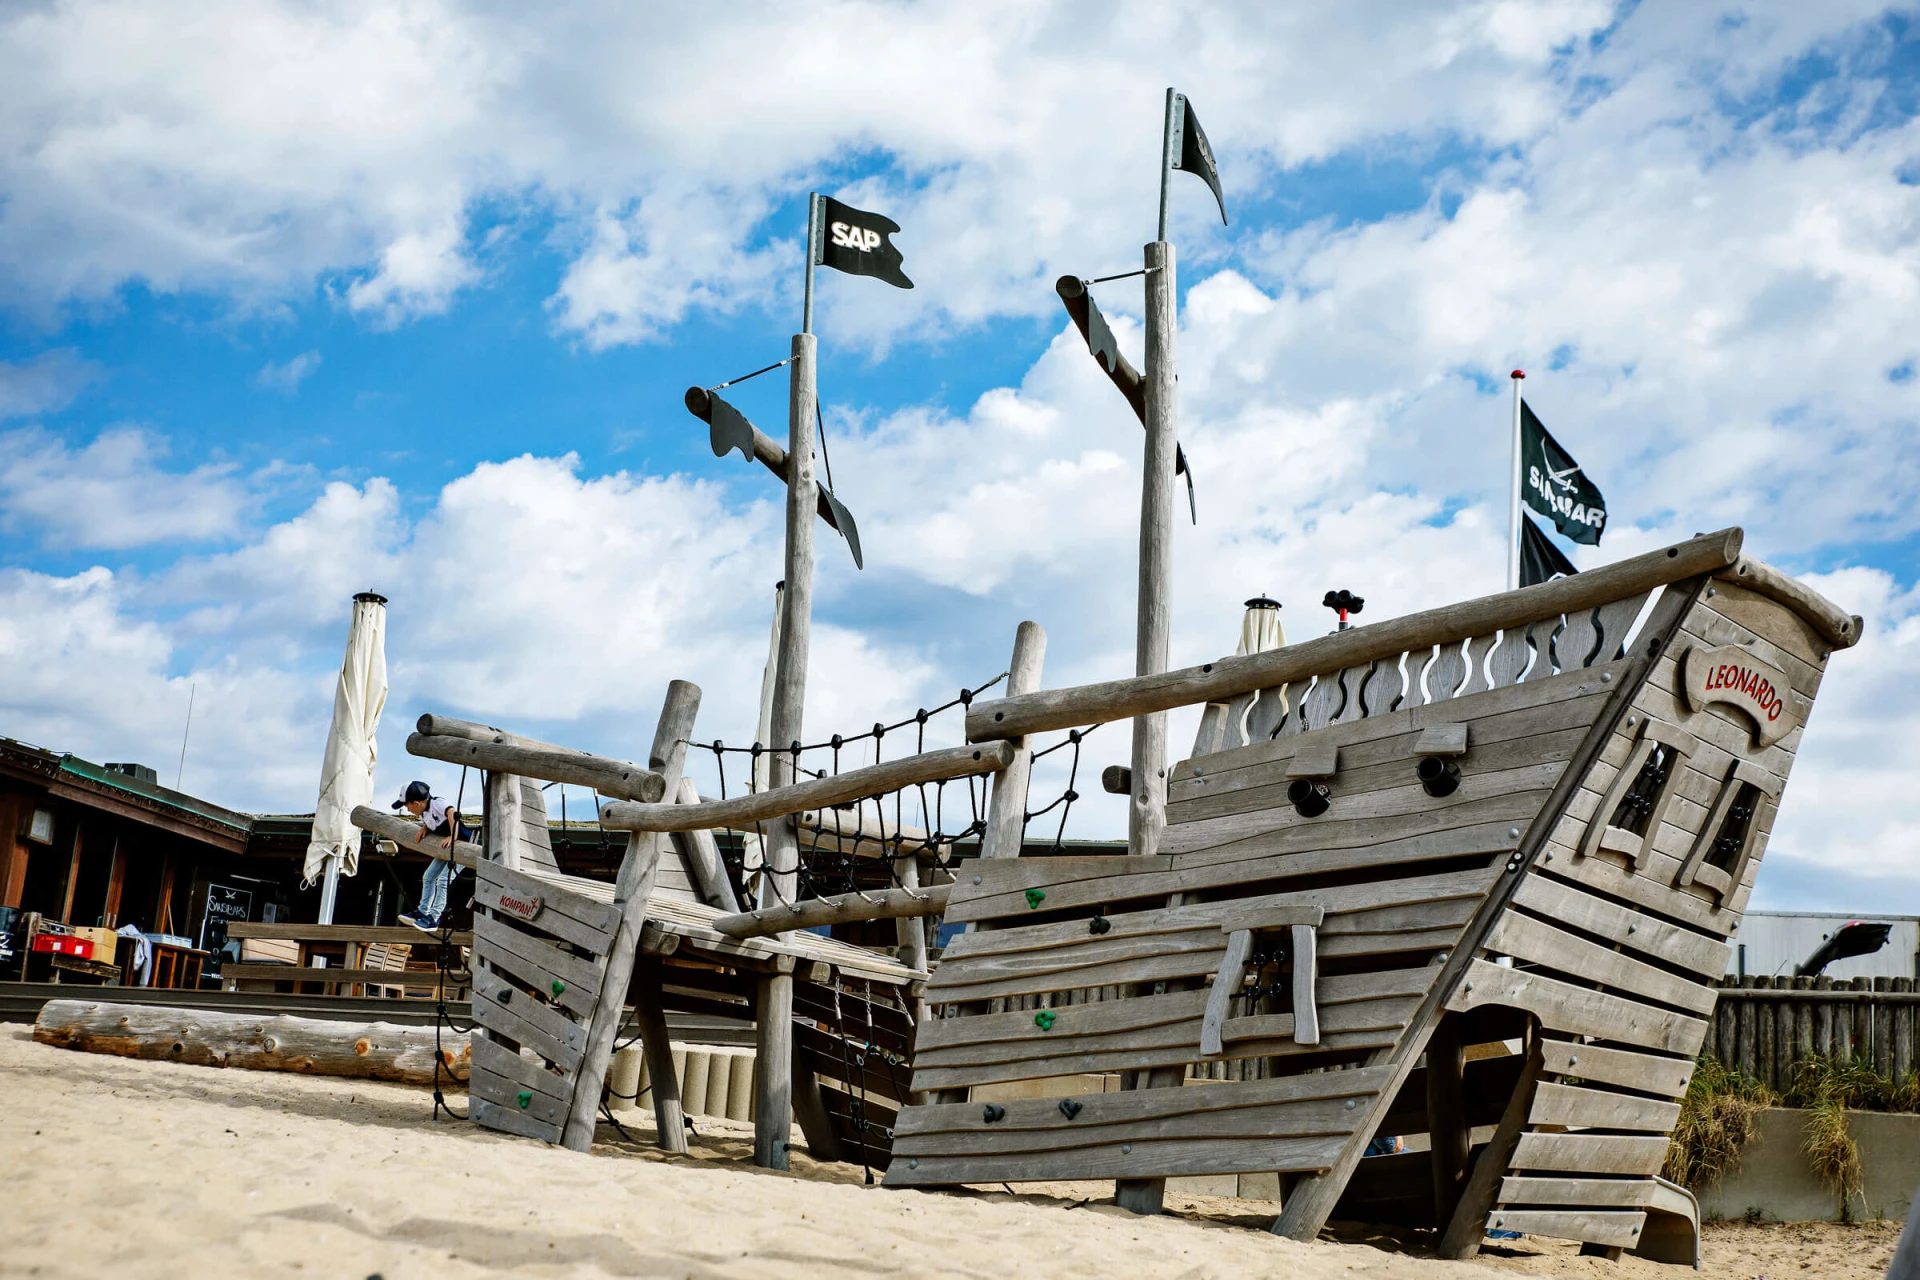 Wooden pirate playground ship on the beach at Sansibar Restaurant